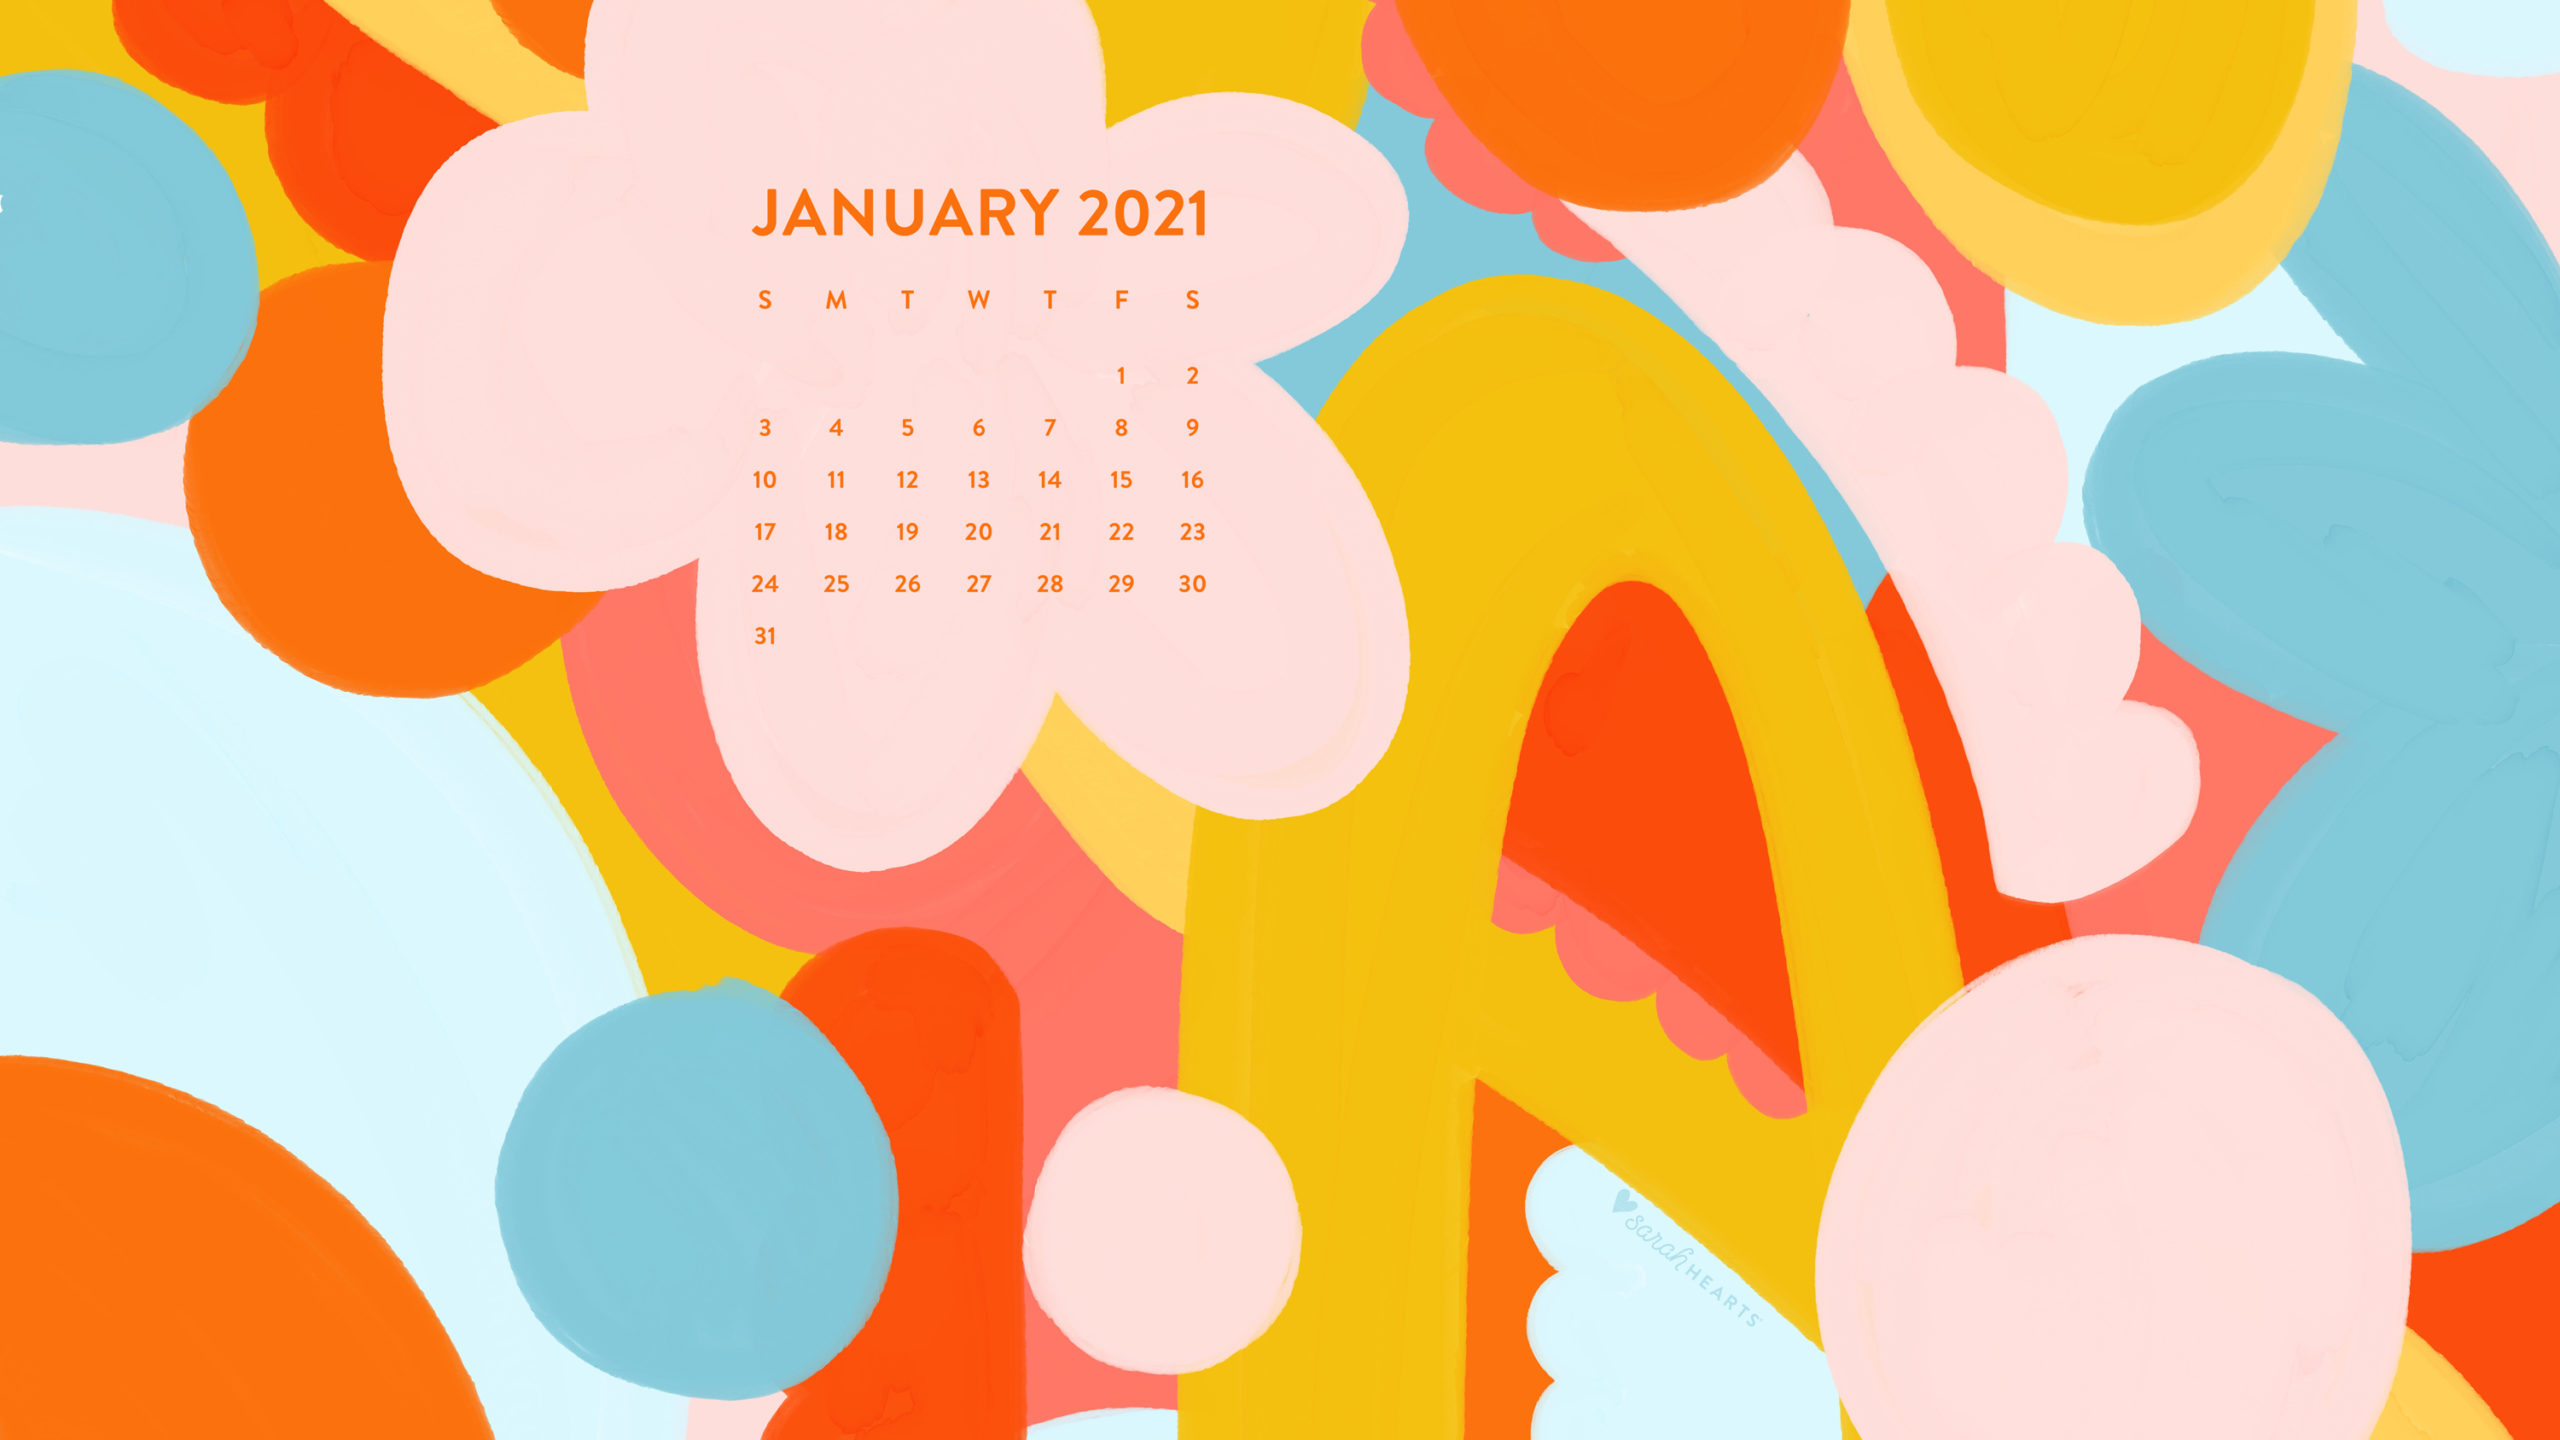 January Calendar Wallpaper Sarah Hearts